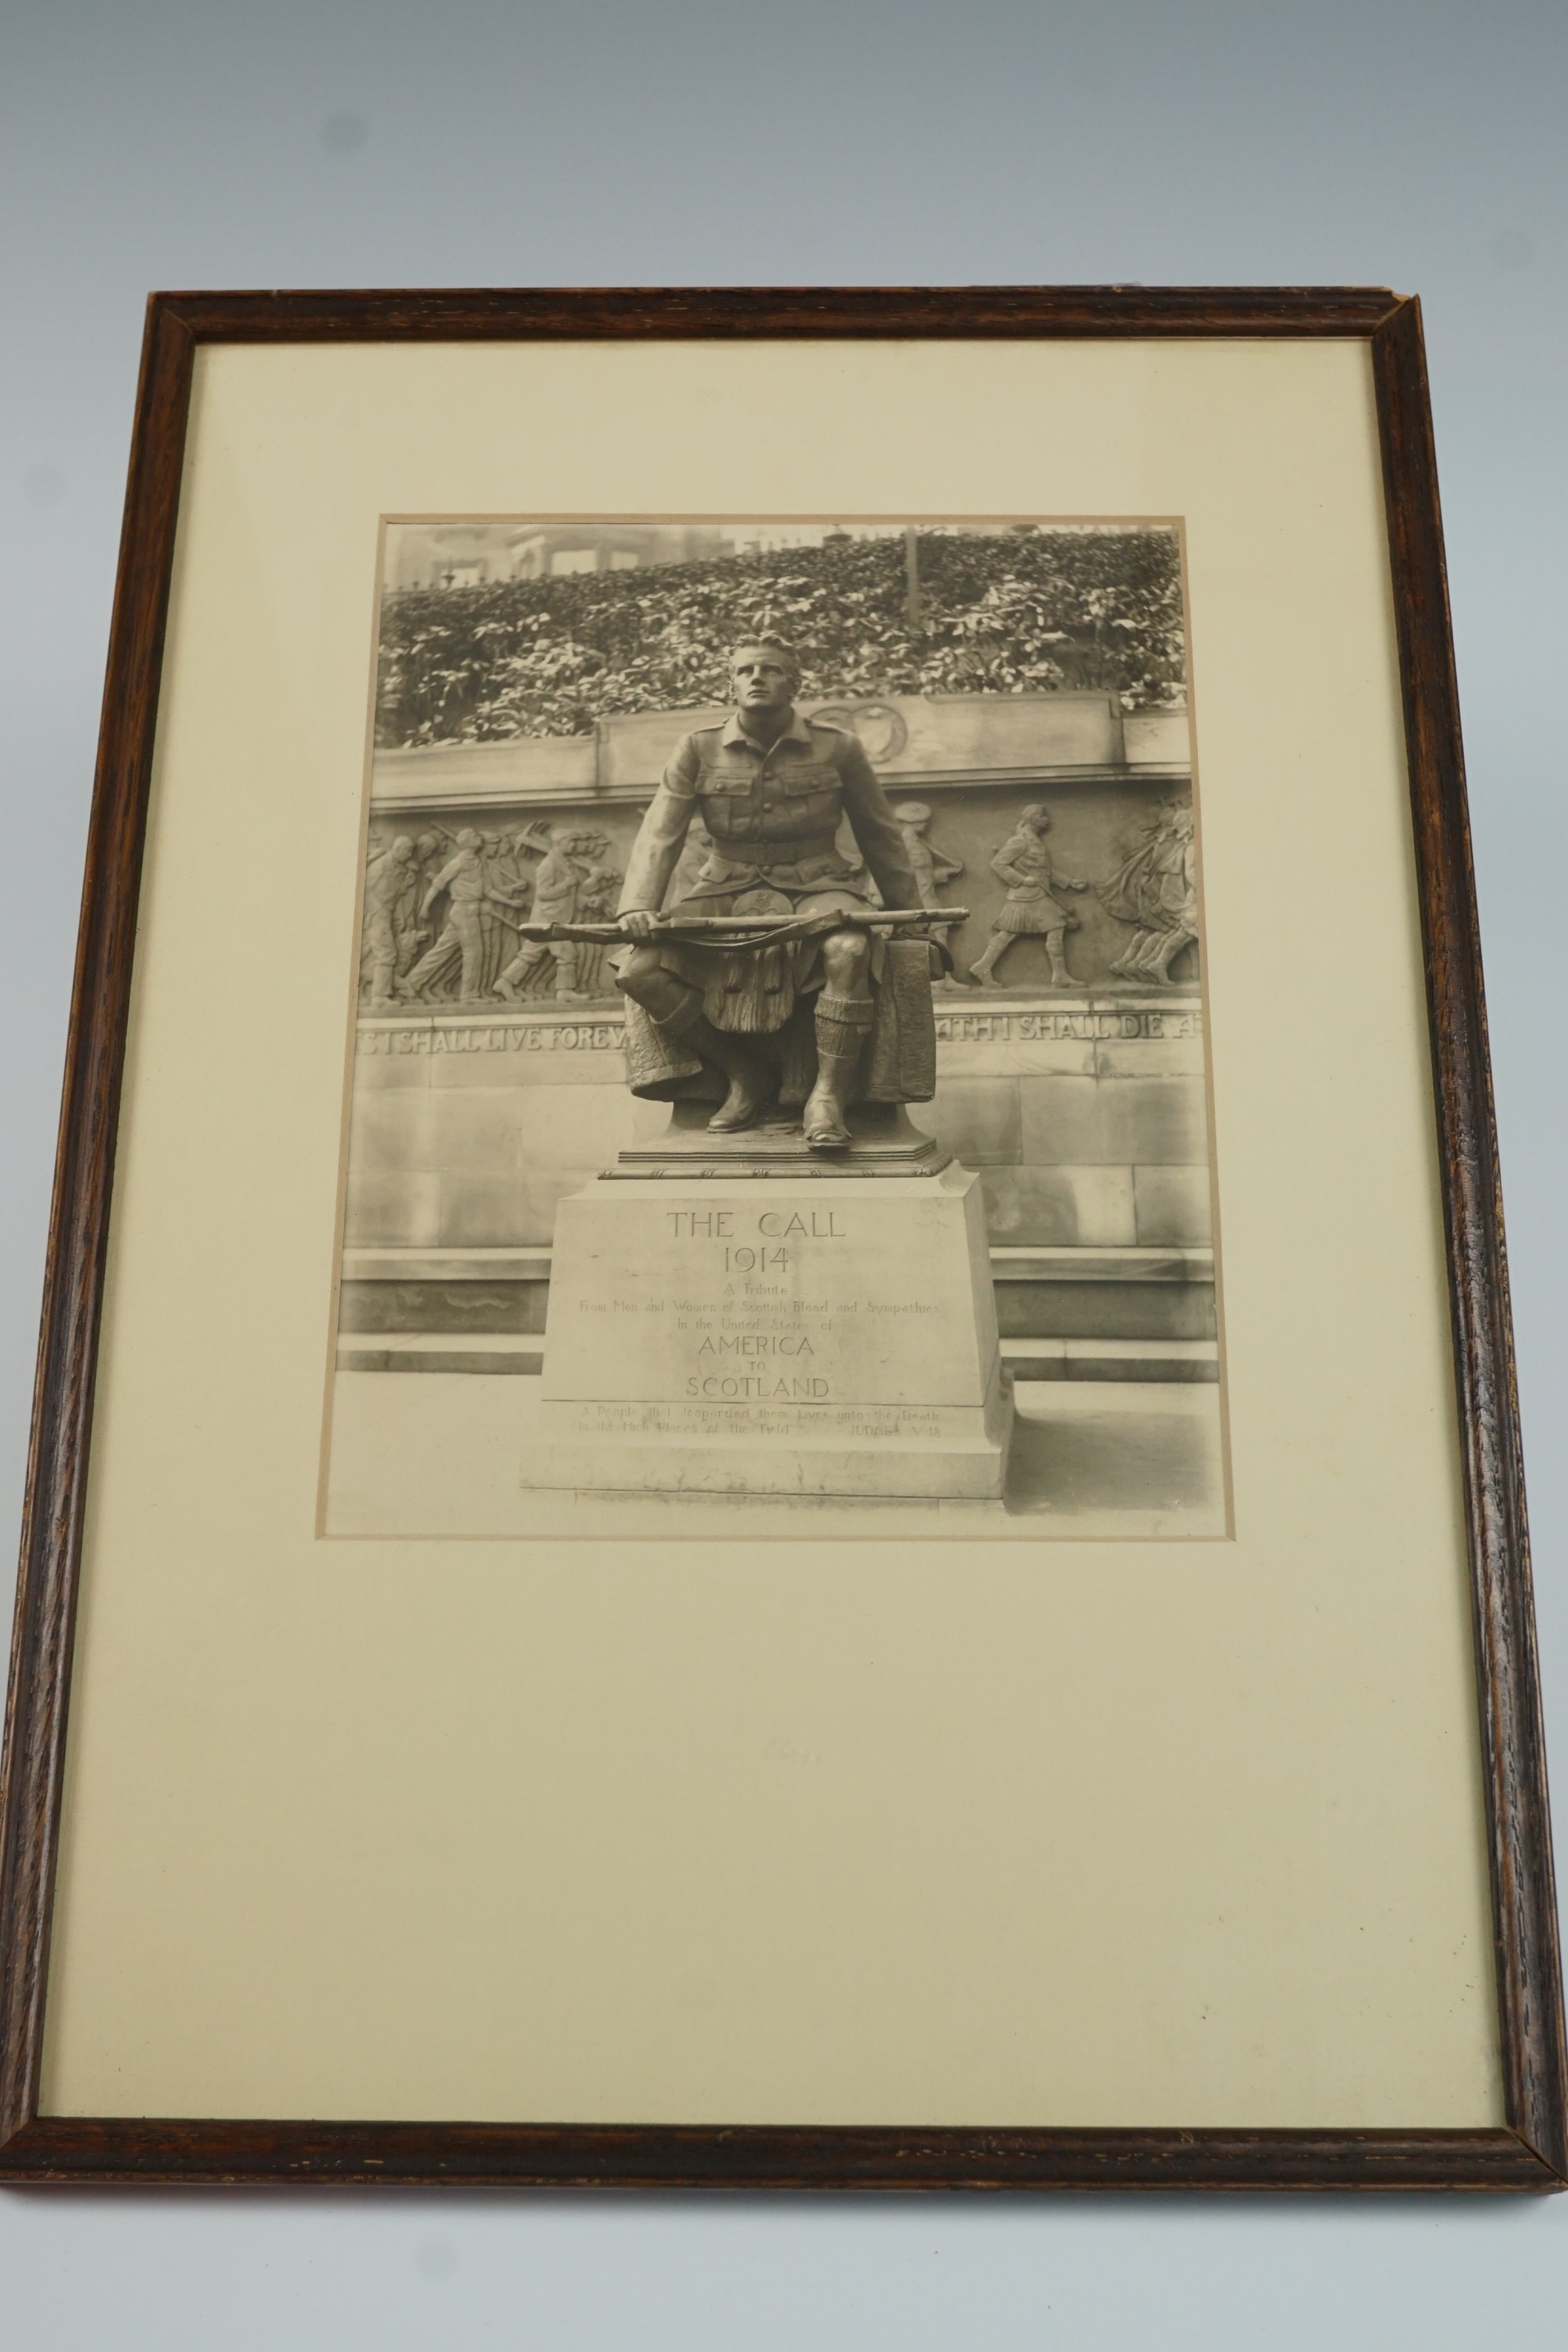 A period monochrome photograph of the Scottish American Memorial at Edinburgh, given by Scottish-